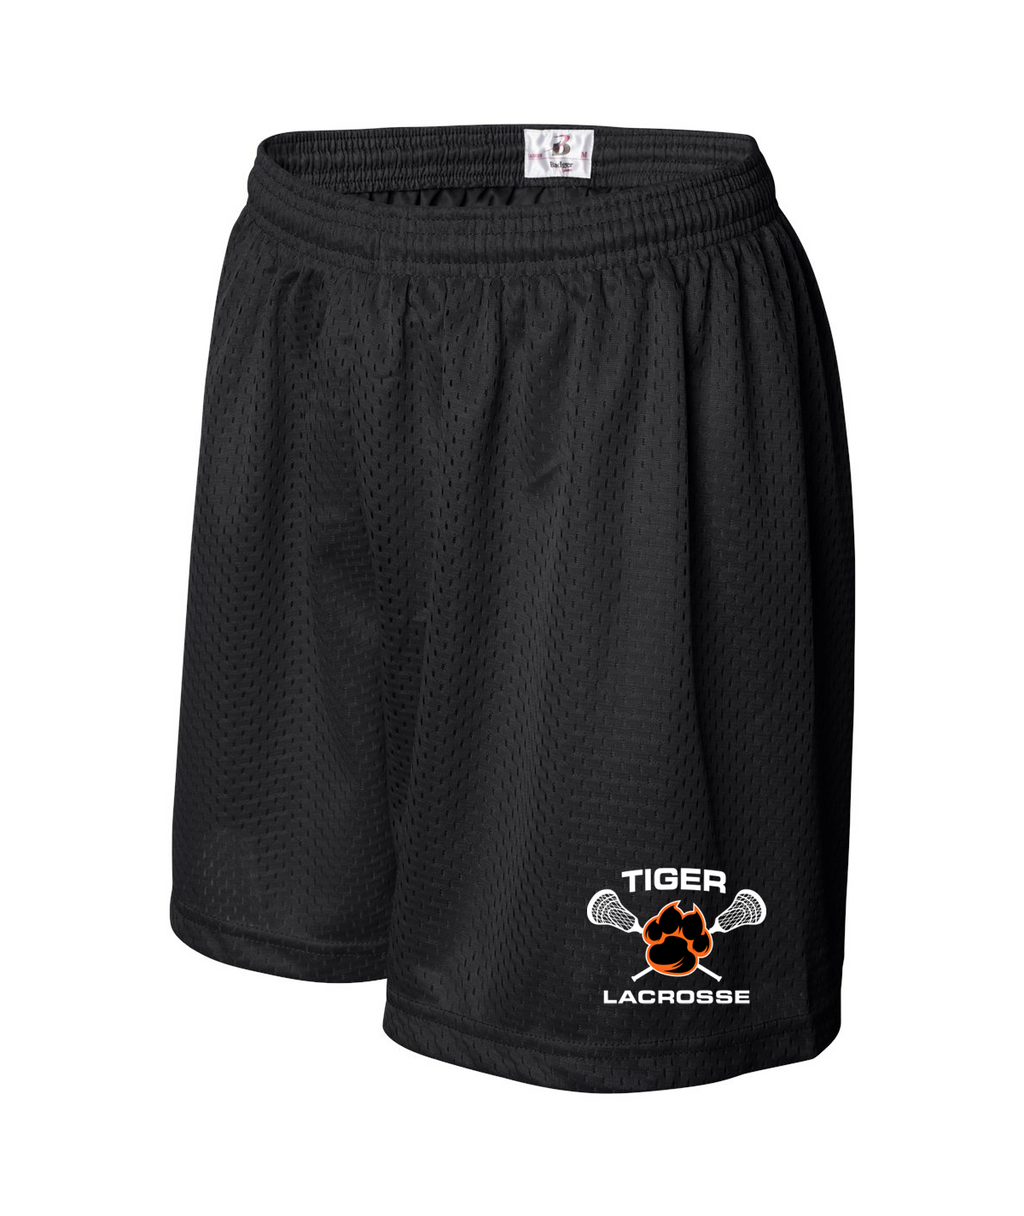 Tiger Lacrosse Womens/Girls Mesh Shorts